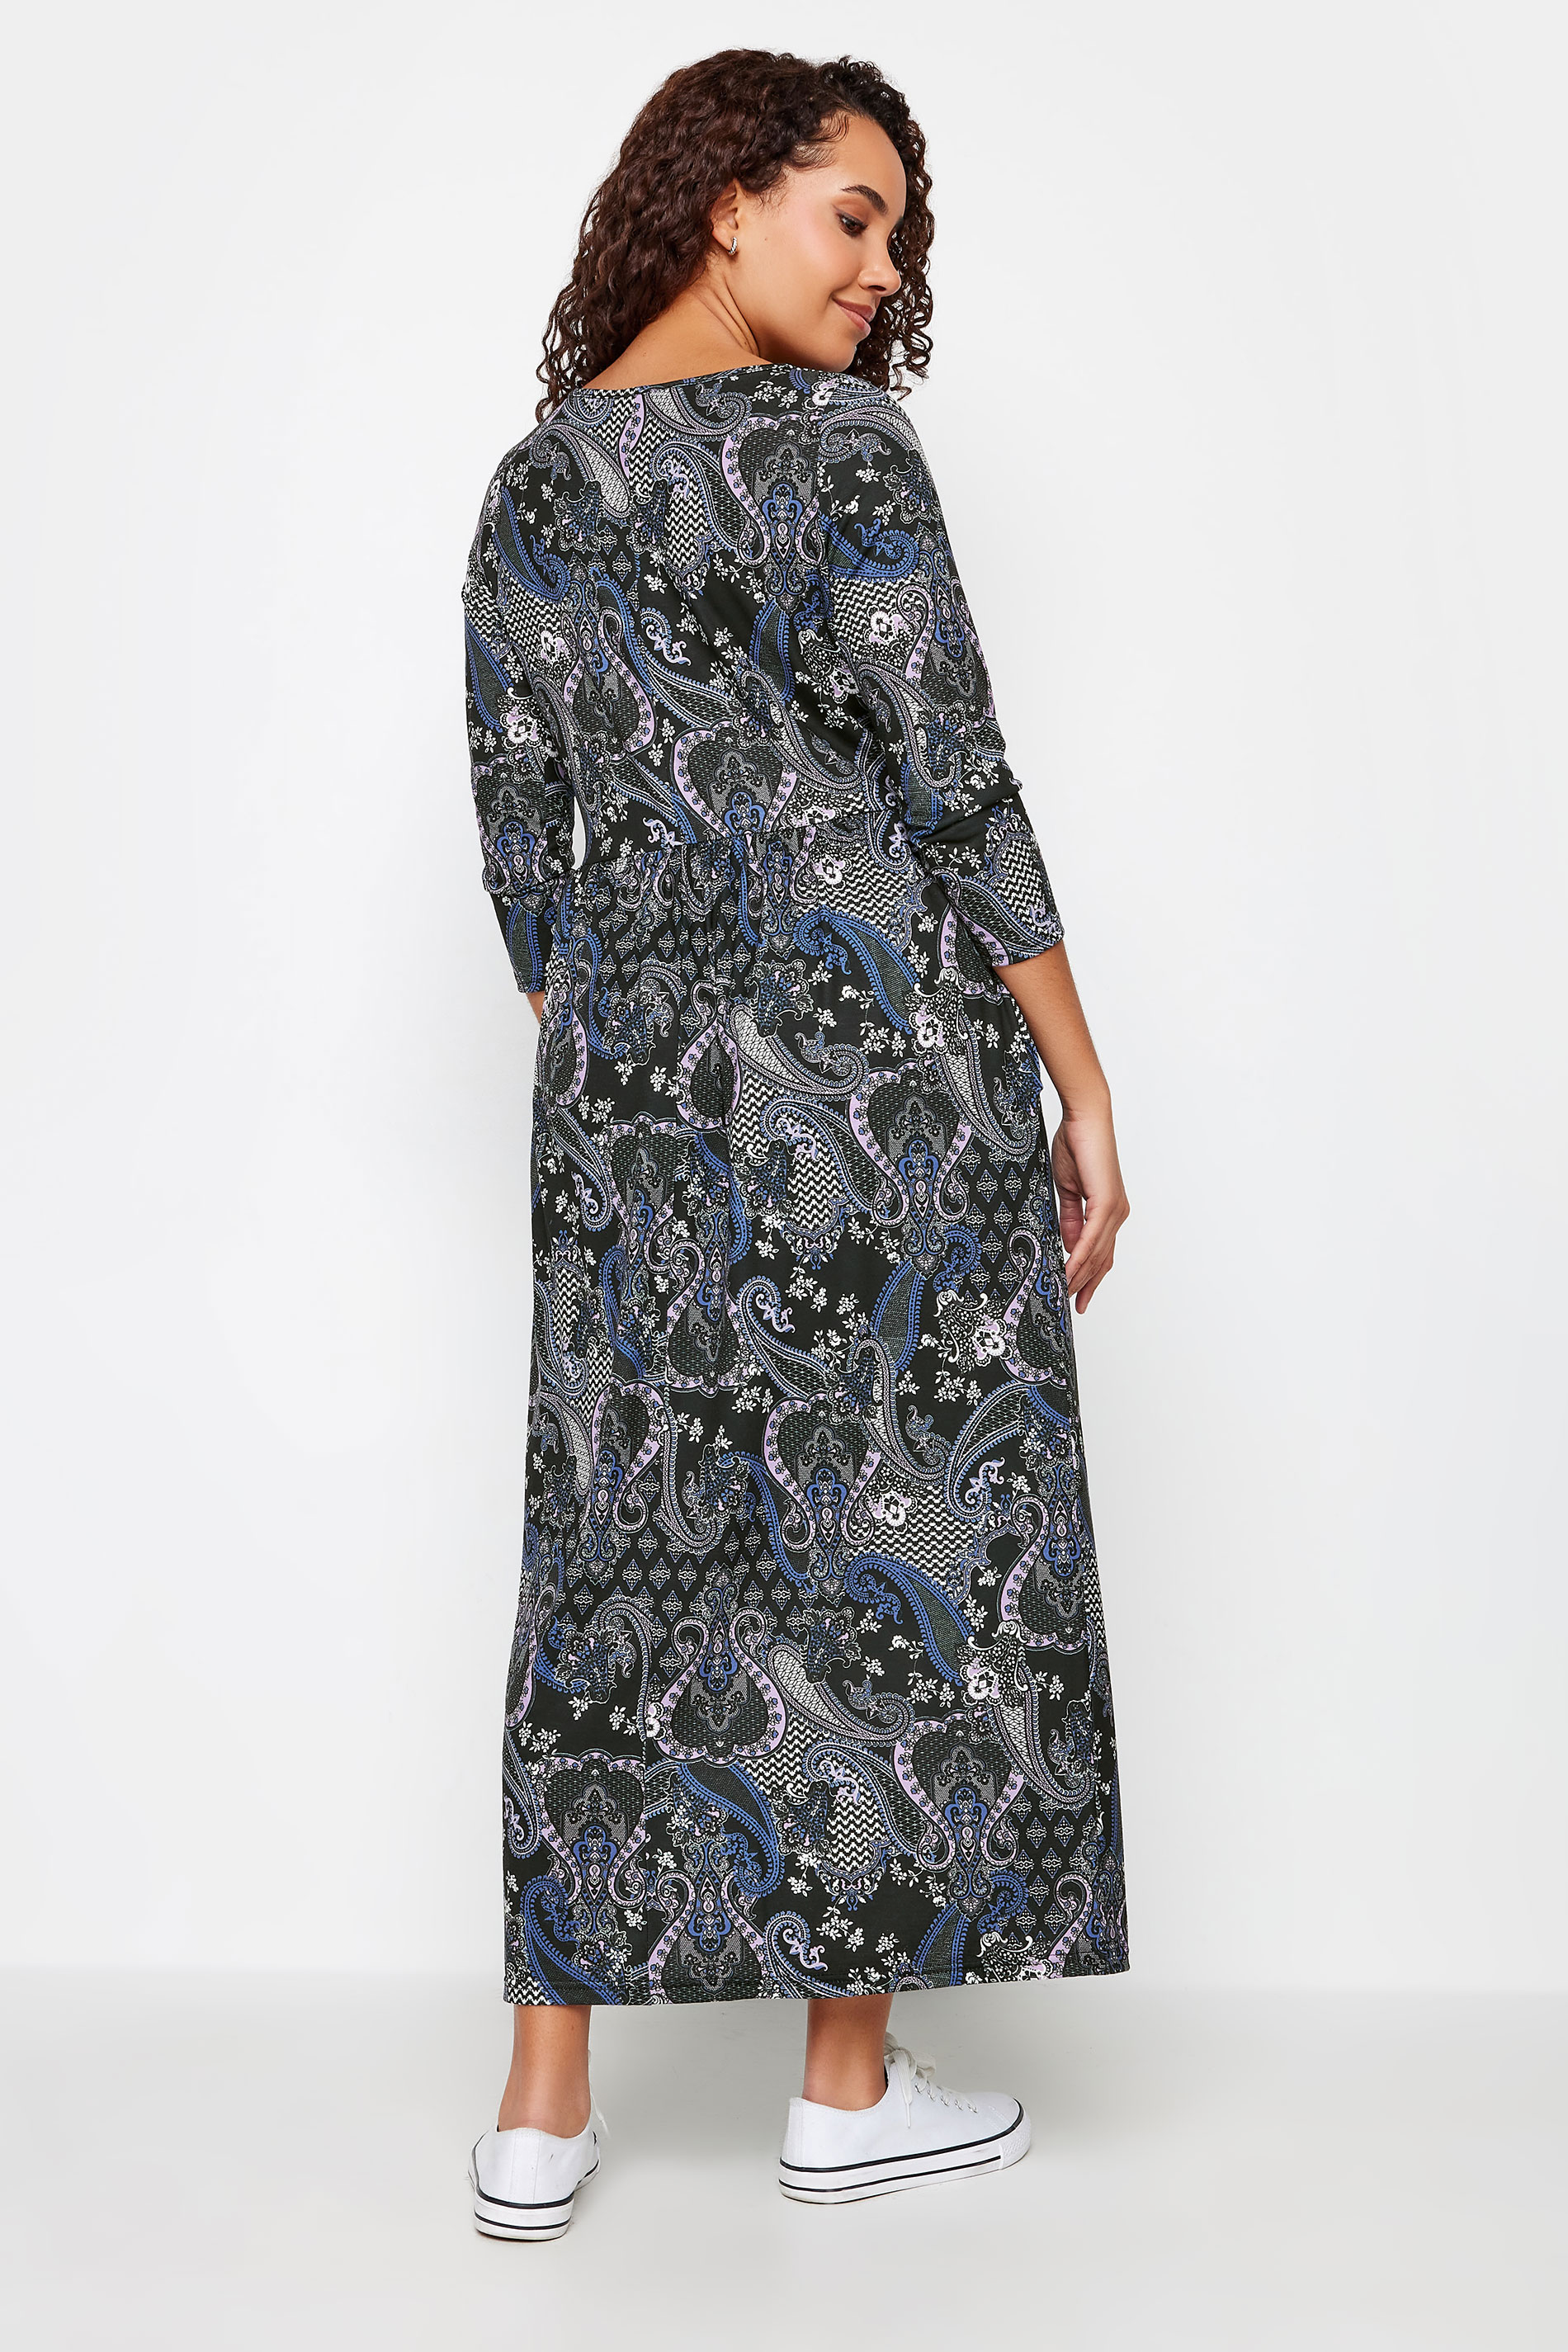 M&Co Black Paisley Print Midi Dress | M&Co 3